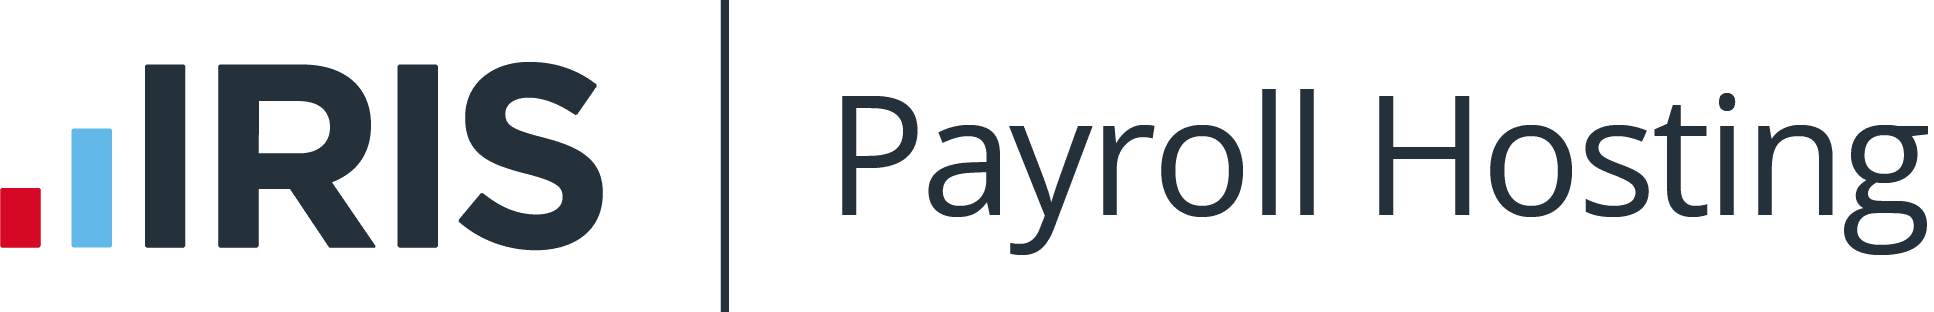 IRIS PayrollHosting Artboard 1 | Cloud Payroll Software